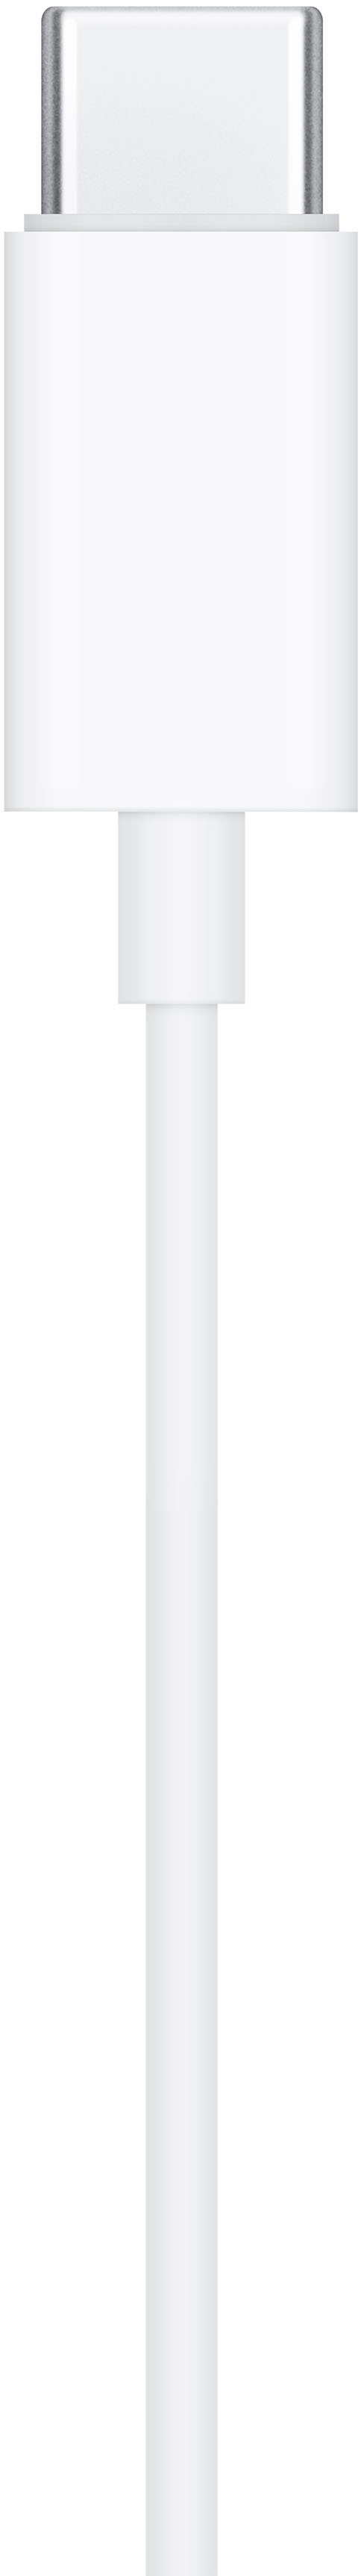 Apple Earpods Usb-c Wired - White